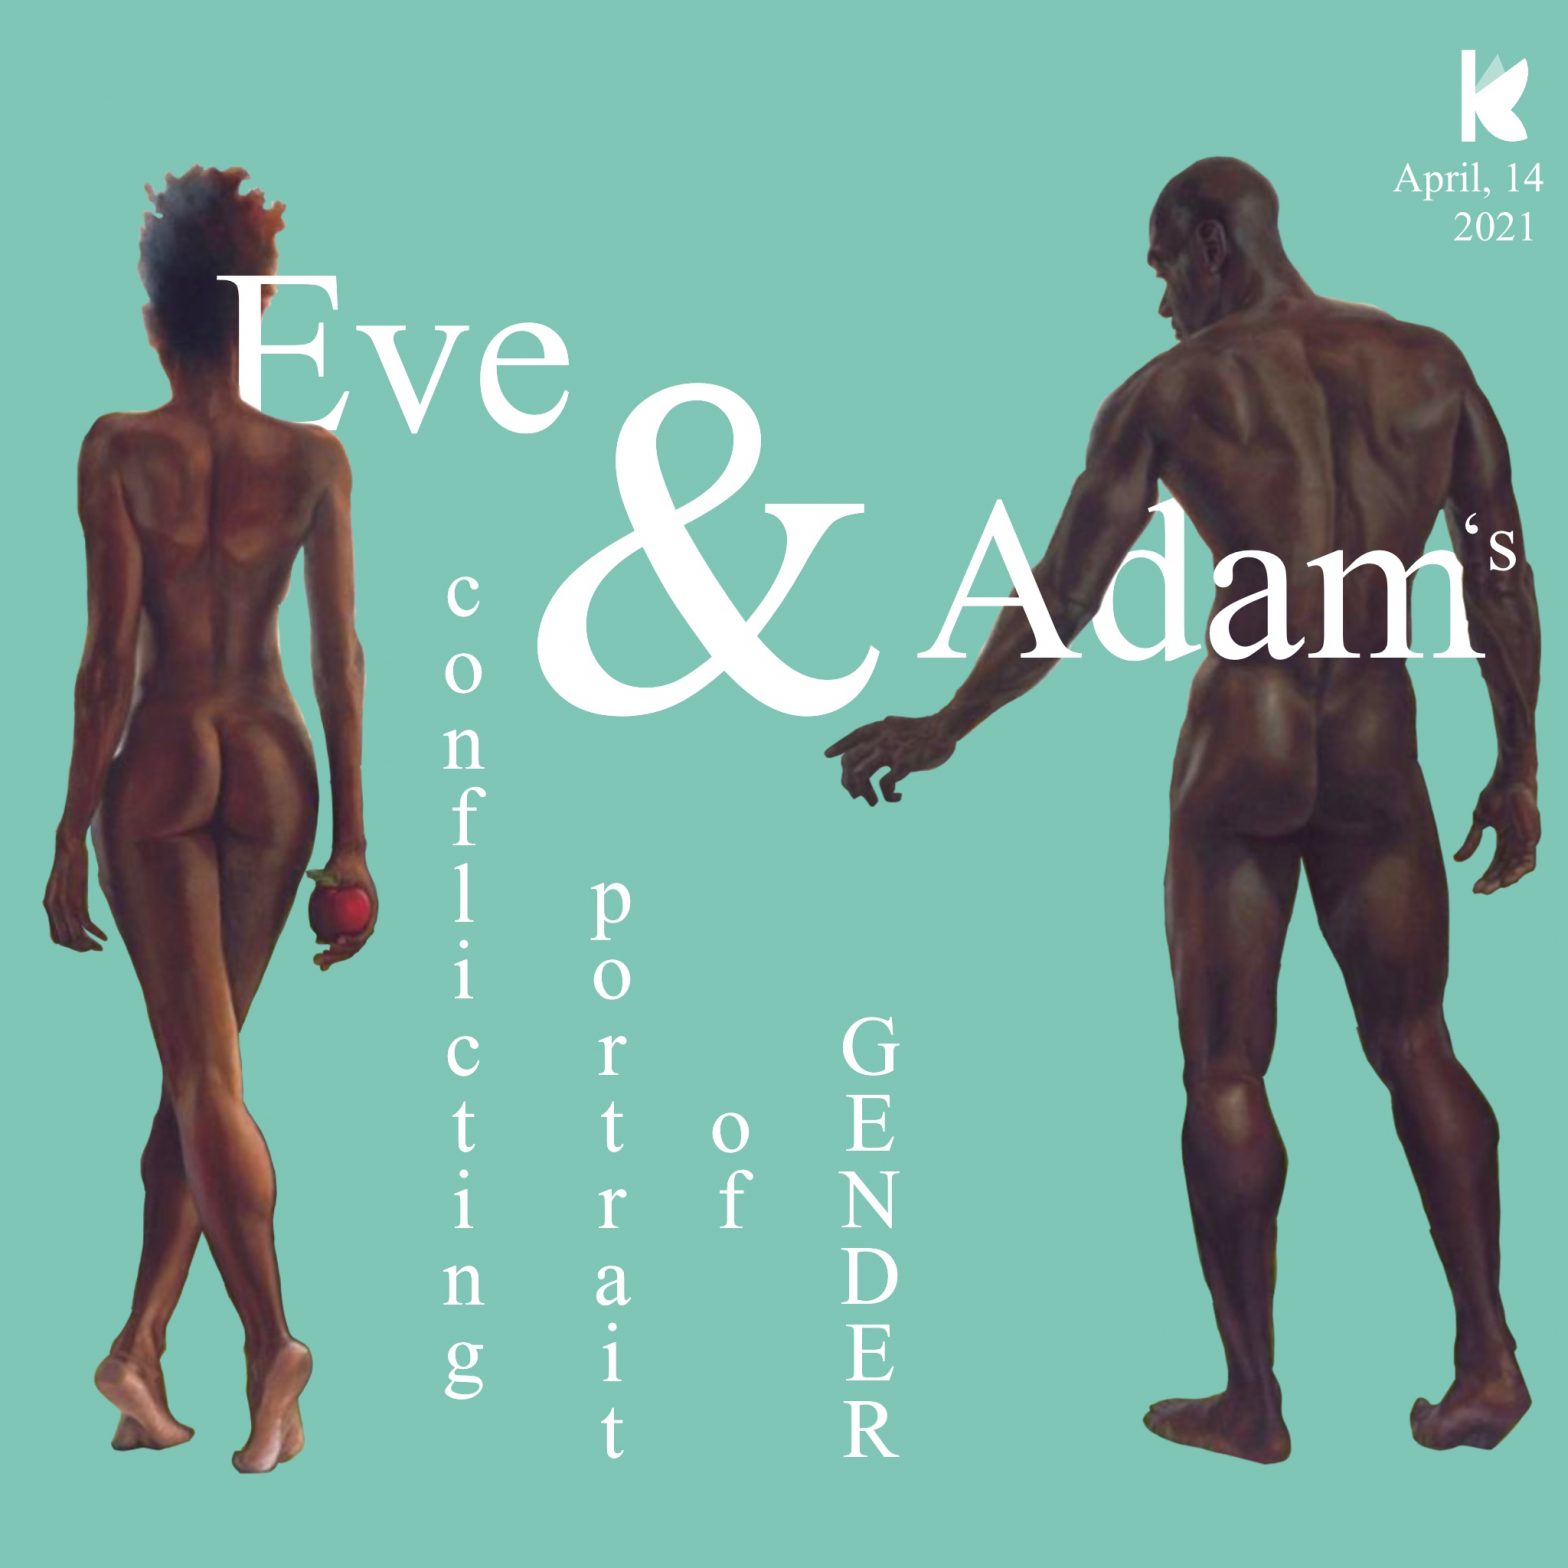 Eve and Adam’s conflicting portrait of gender